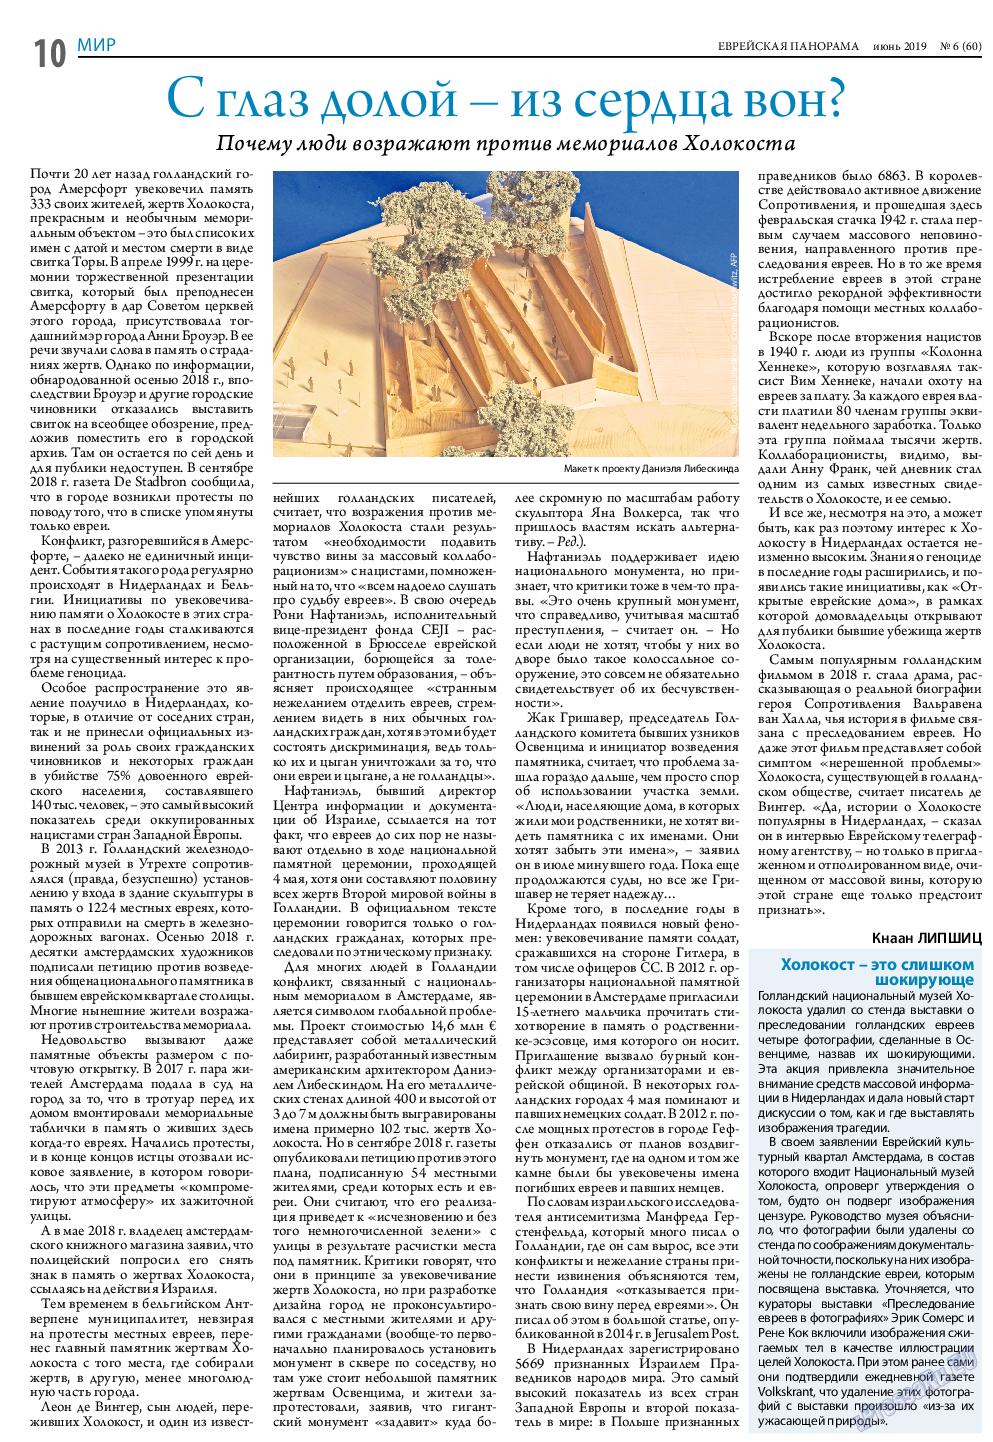 Еврейская панорама, газета. 2019 №6 стр.10